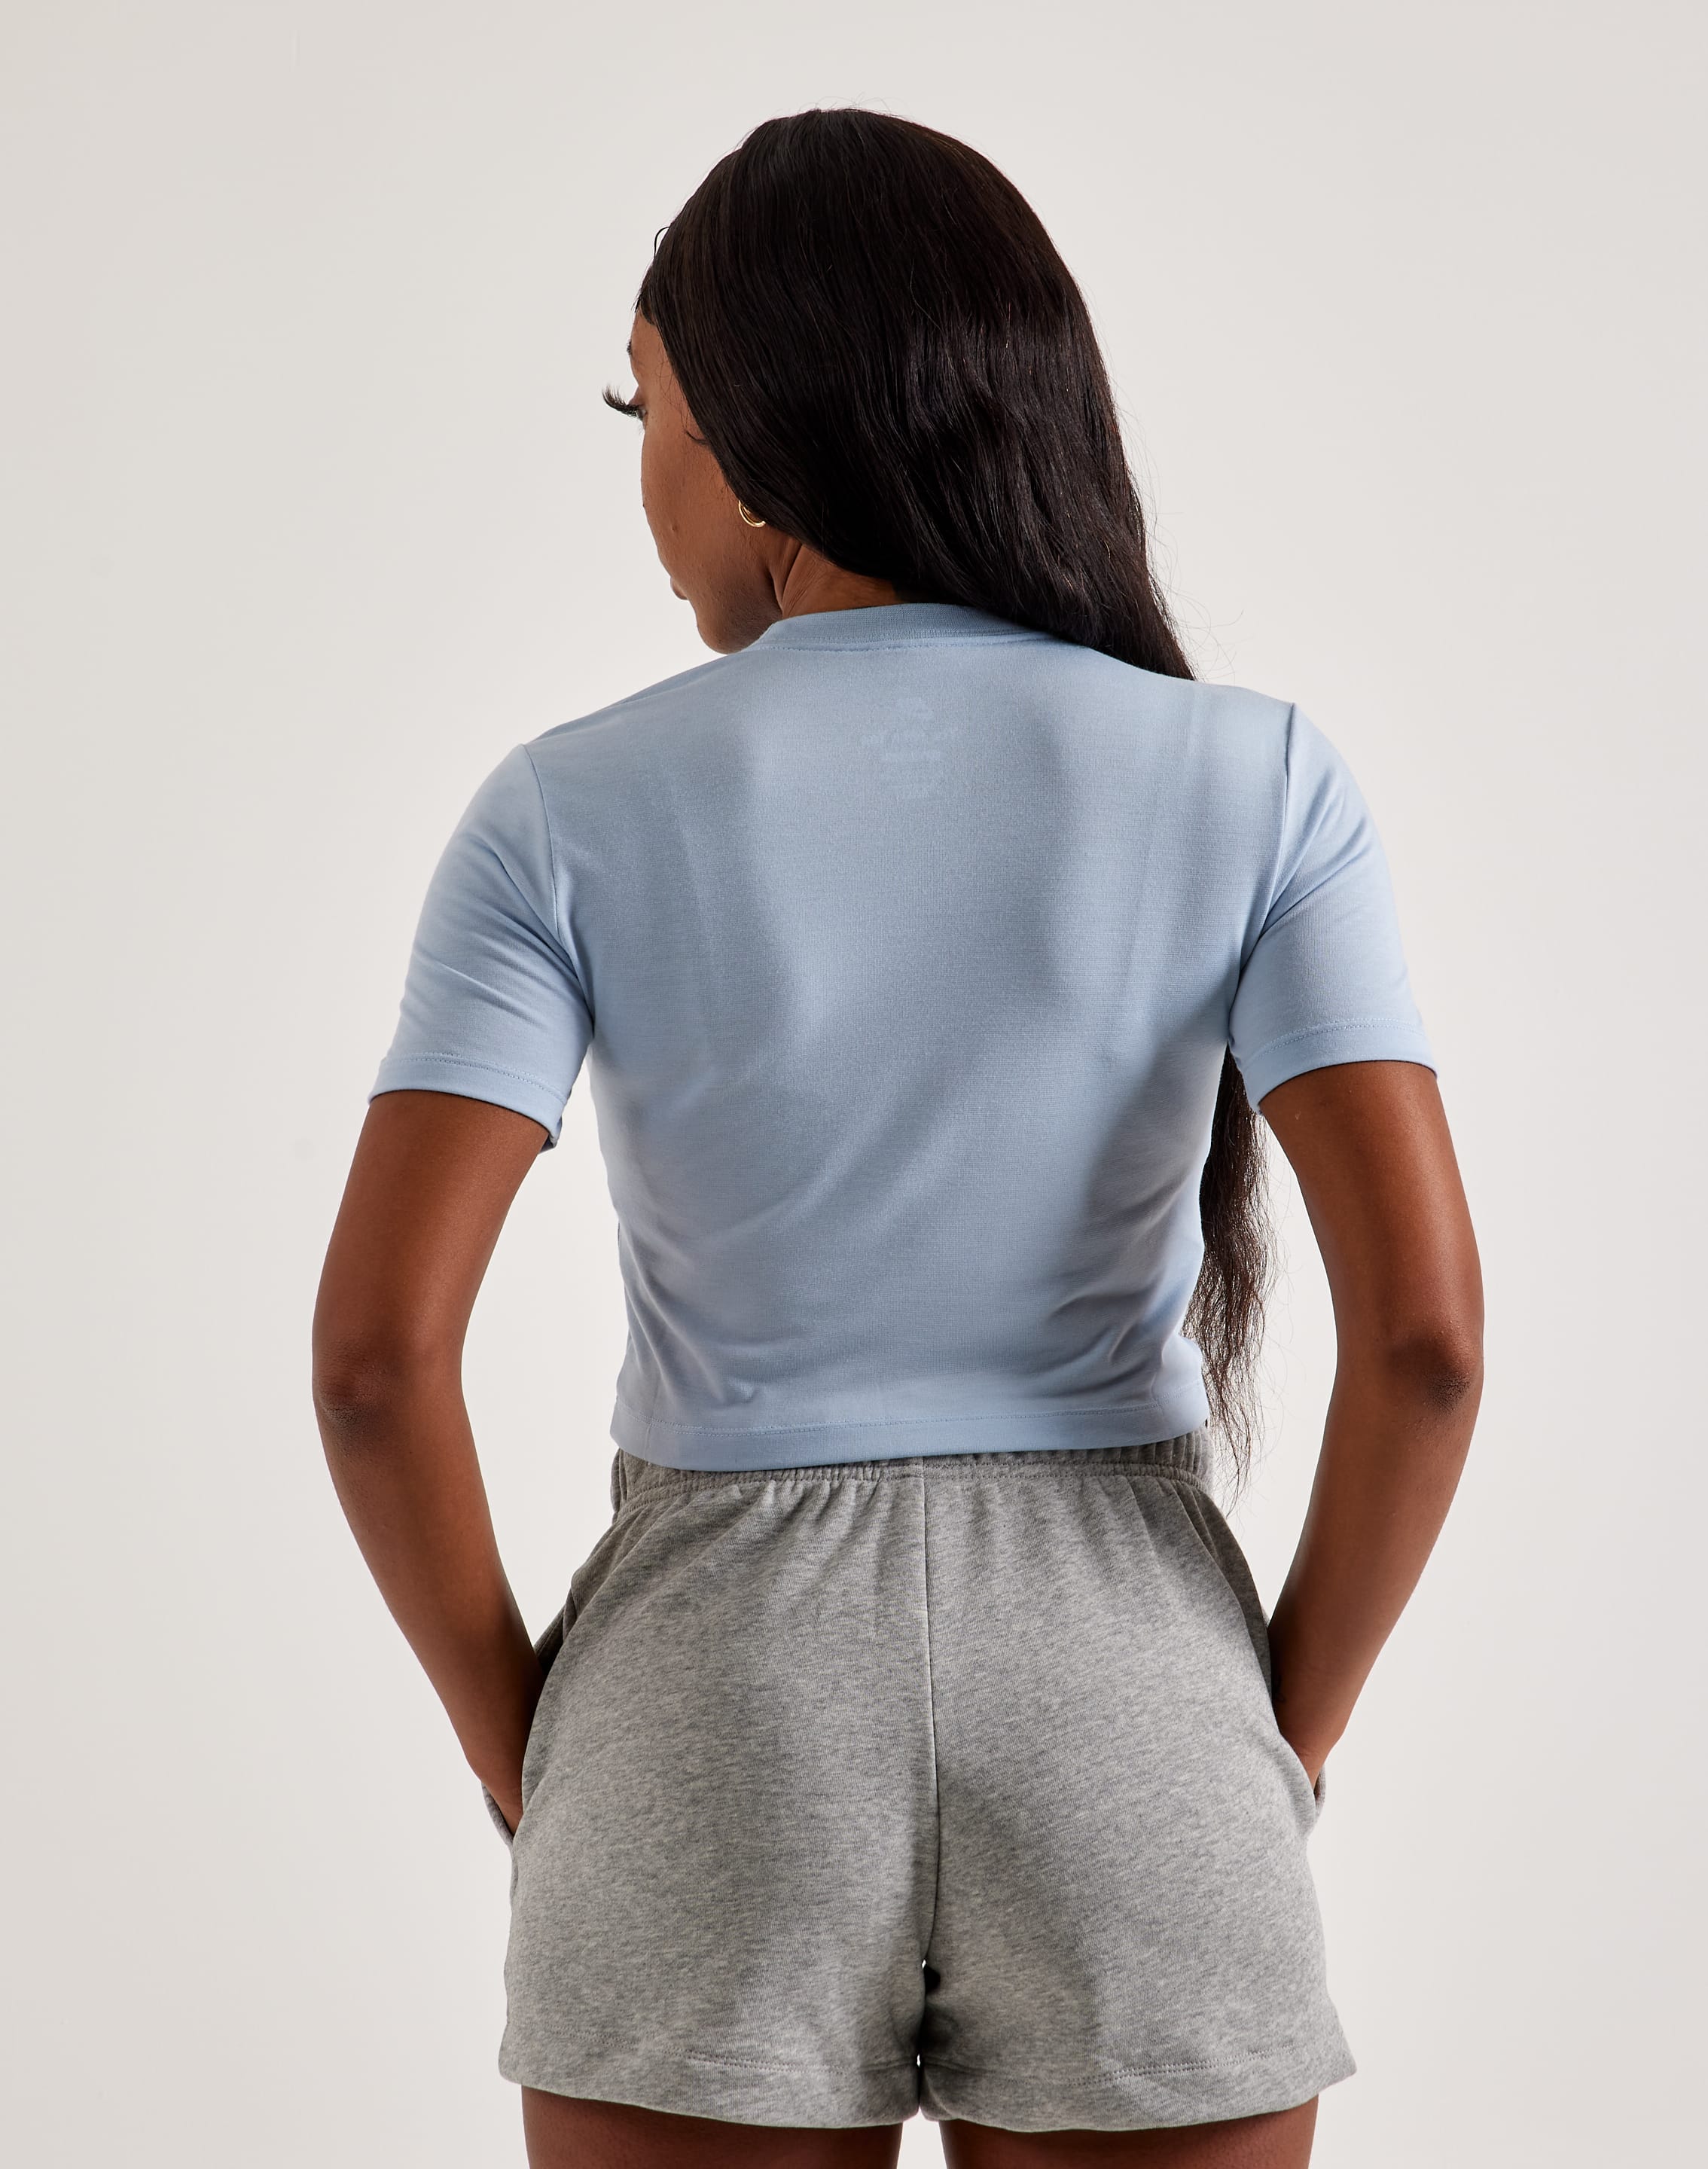 Nike Womens Dri-fit Relay Printed Cropped - Depop